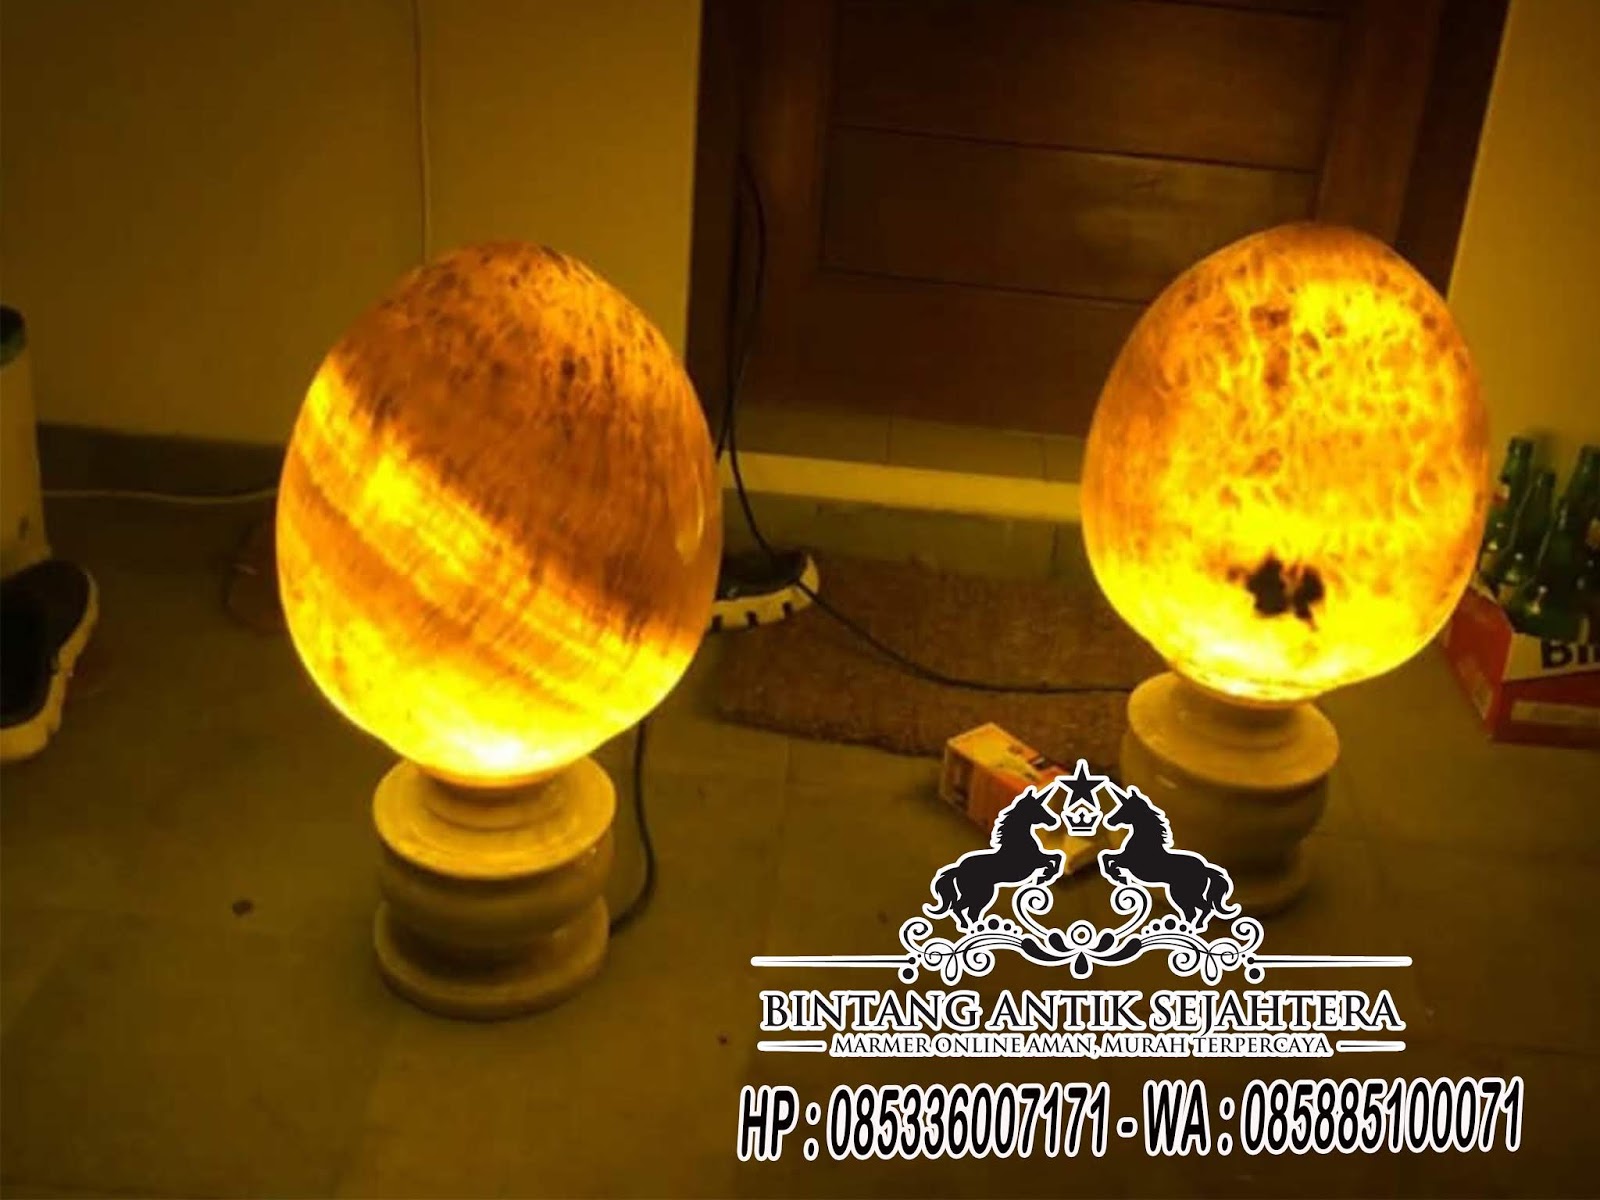  Kerajinan  Onix Tulungagung Kap Lampu  Antik Vas  Bunga Marmer